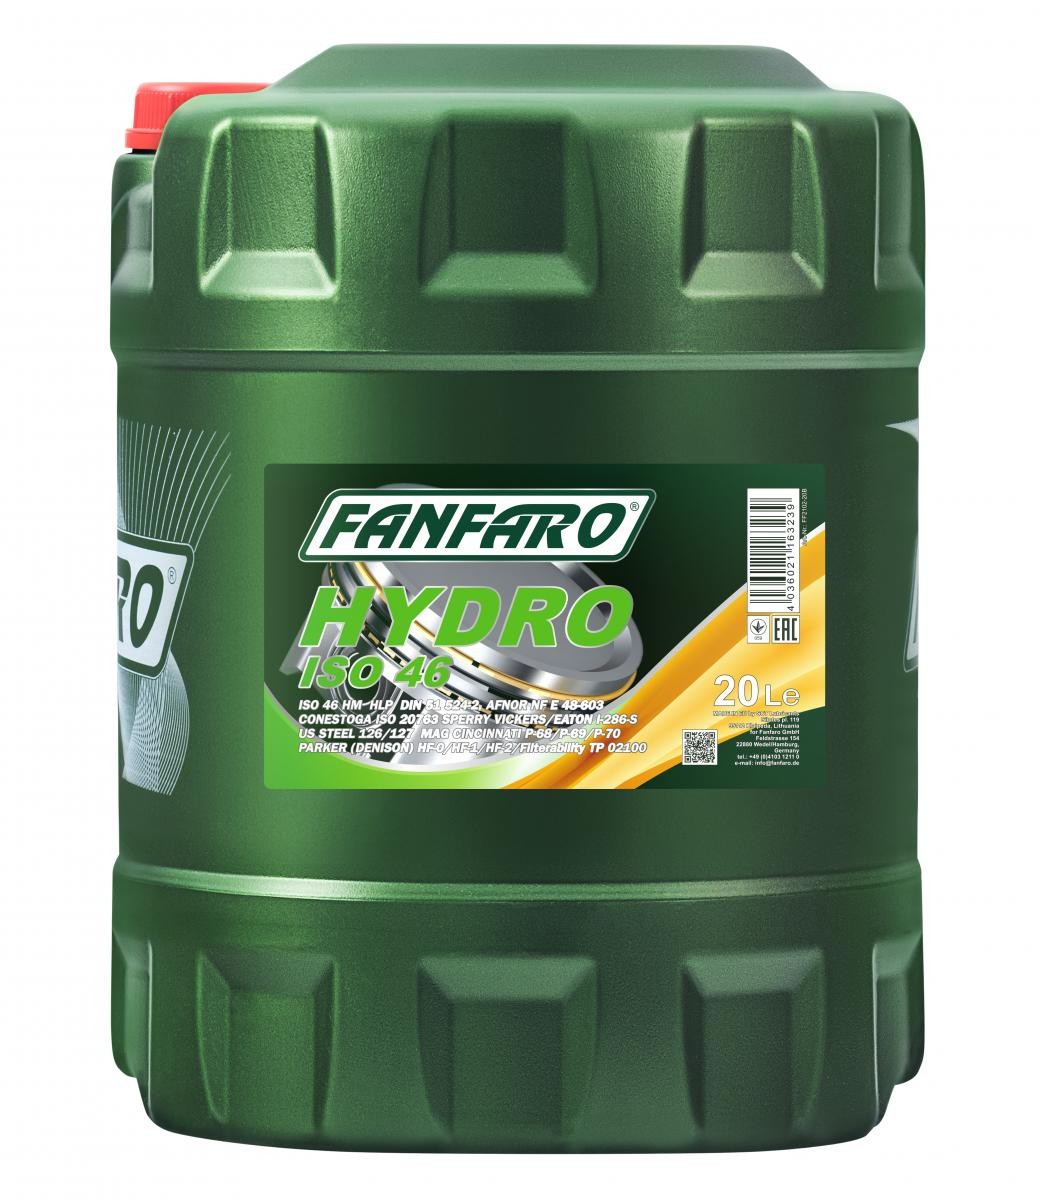 LKW Hydrauliköl FANFARO FF2102-20 kaufen